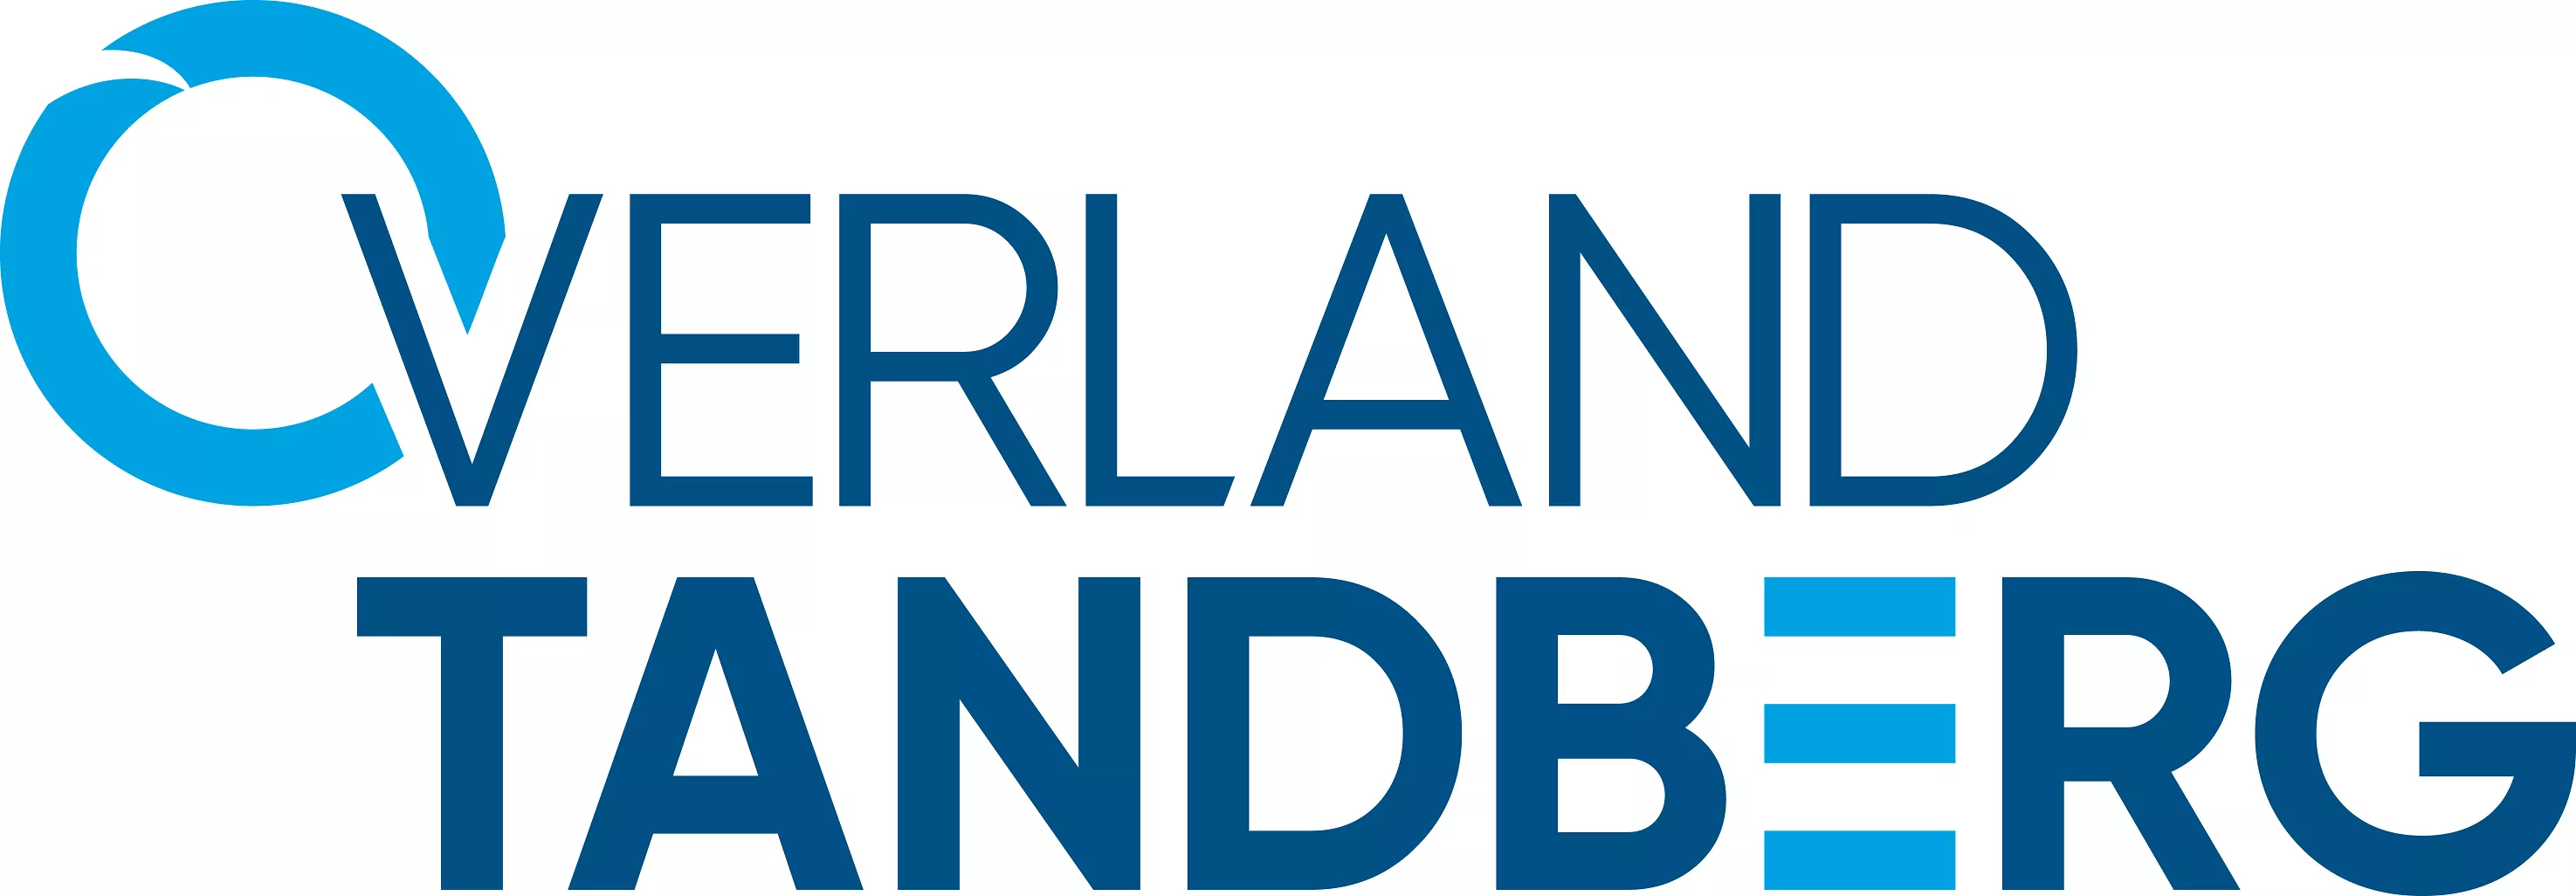 Achat Overland-Tandberg Étiquettes à code-barres LTO-7 (100 et autres produits de la marque Overland-Tandberg